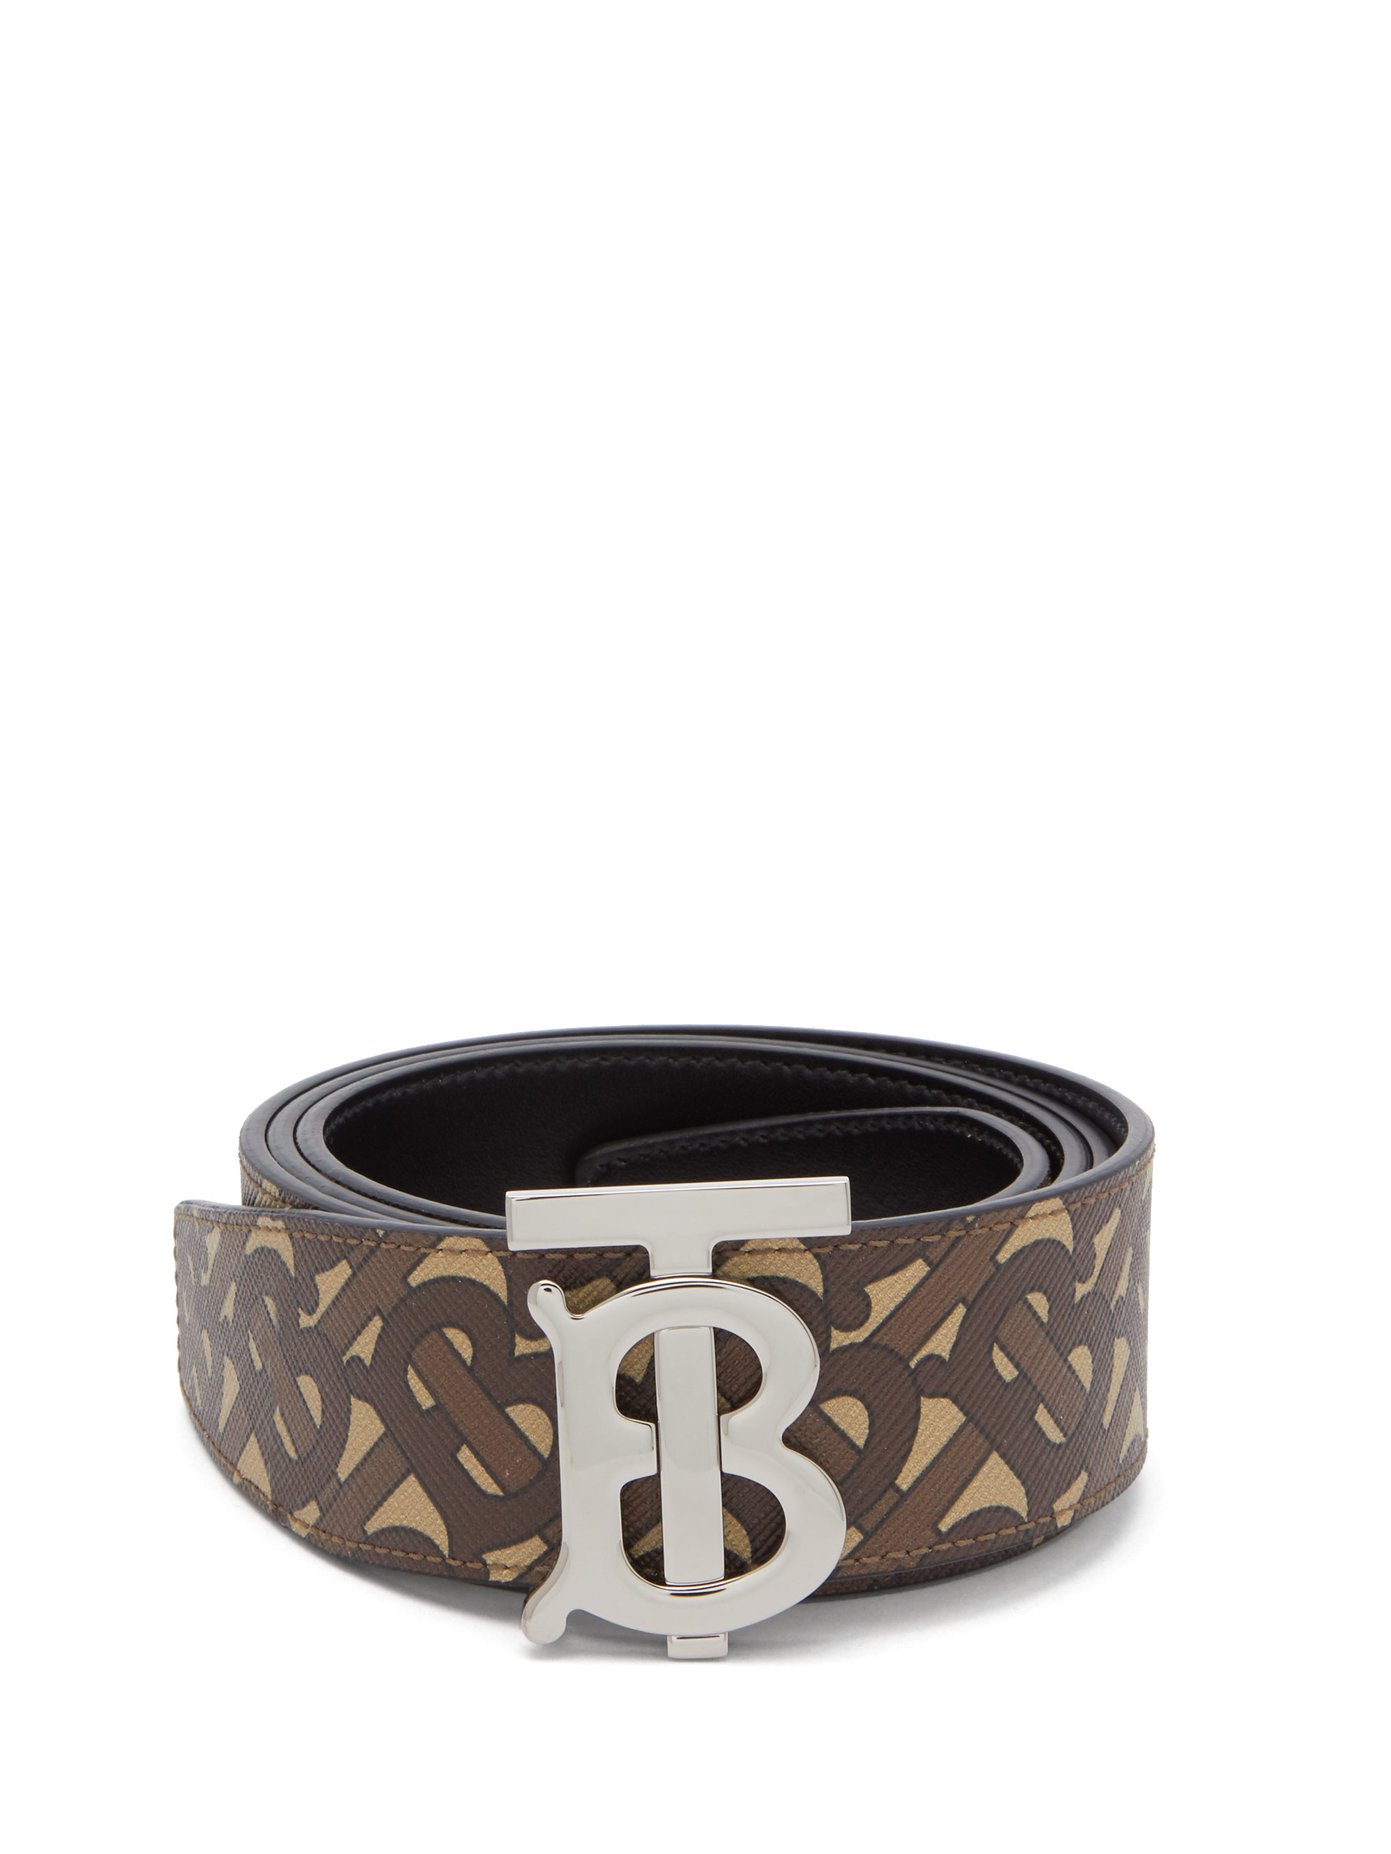 TB-monogram leather belt | Burberry 